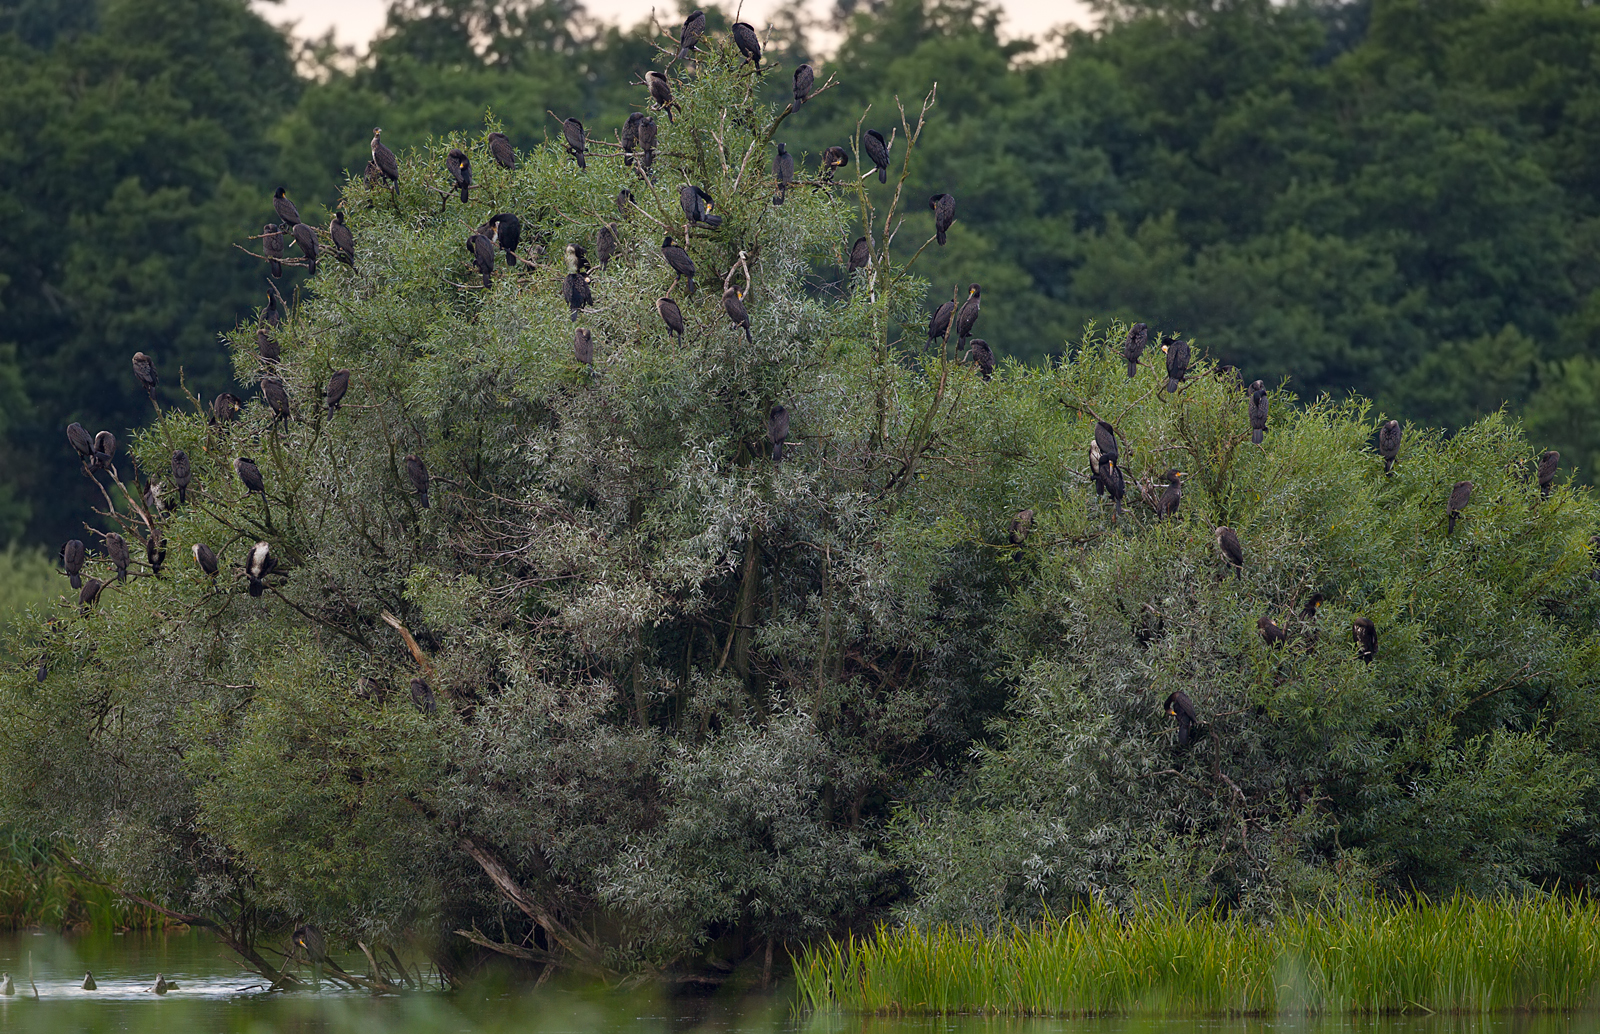 Sleeping cormorants